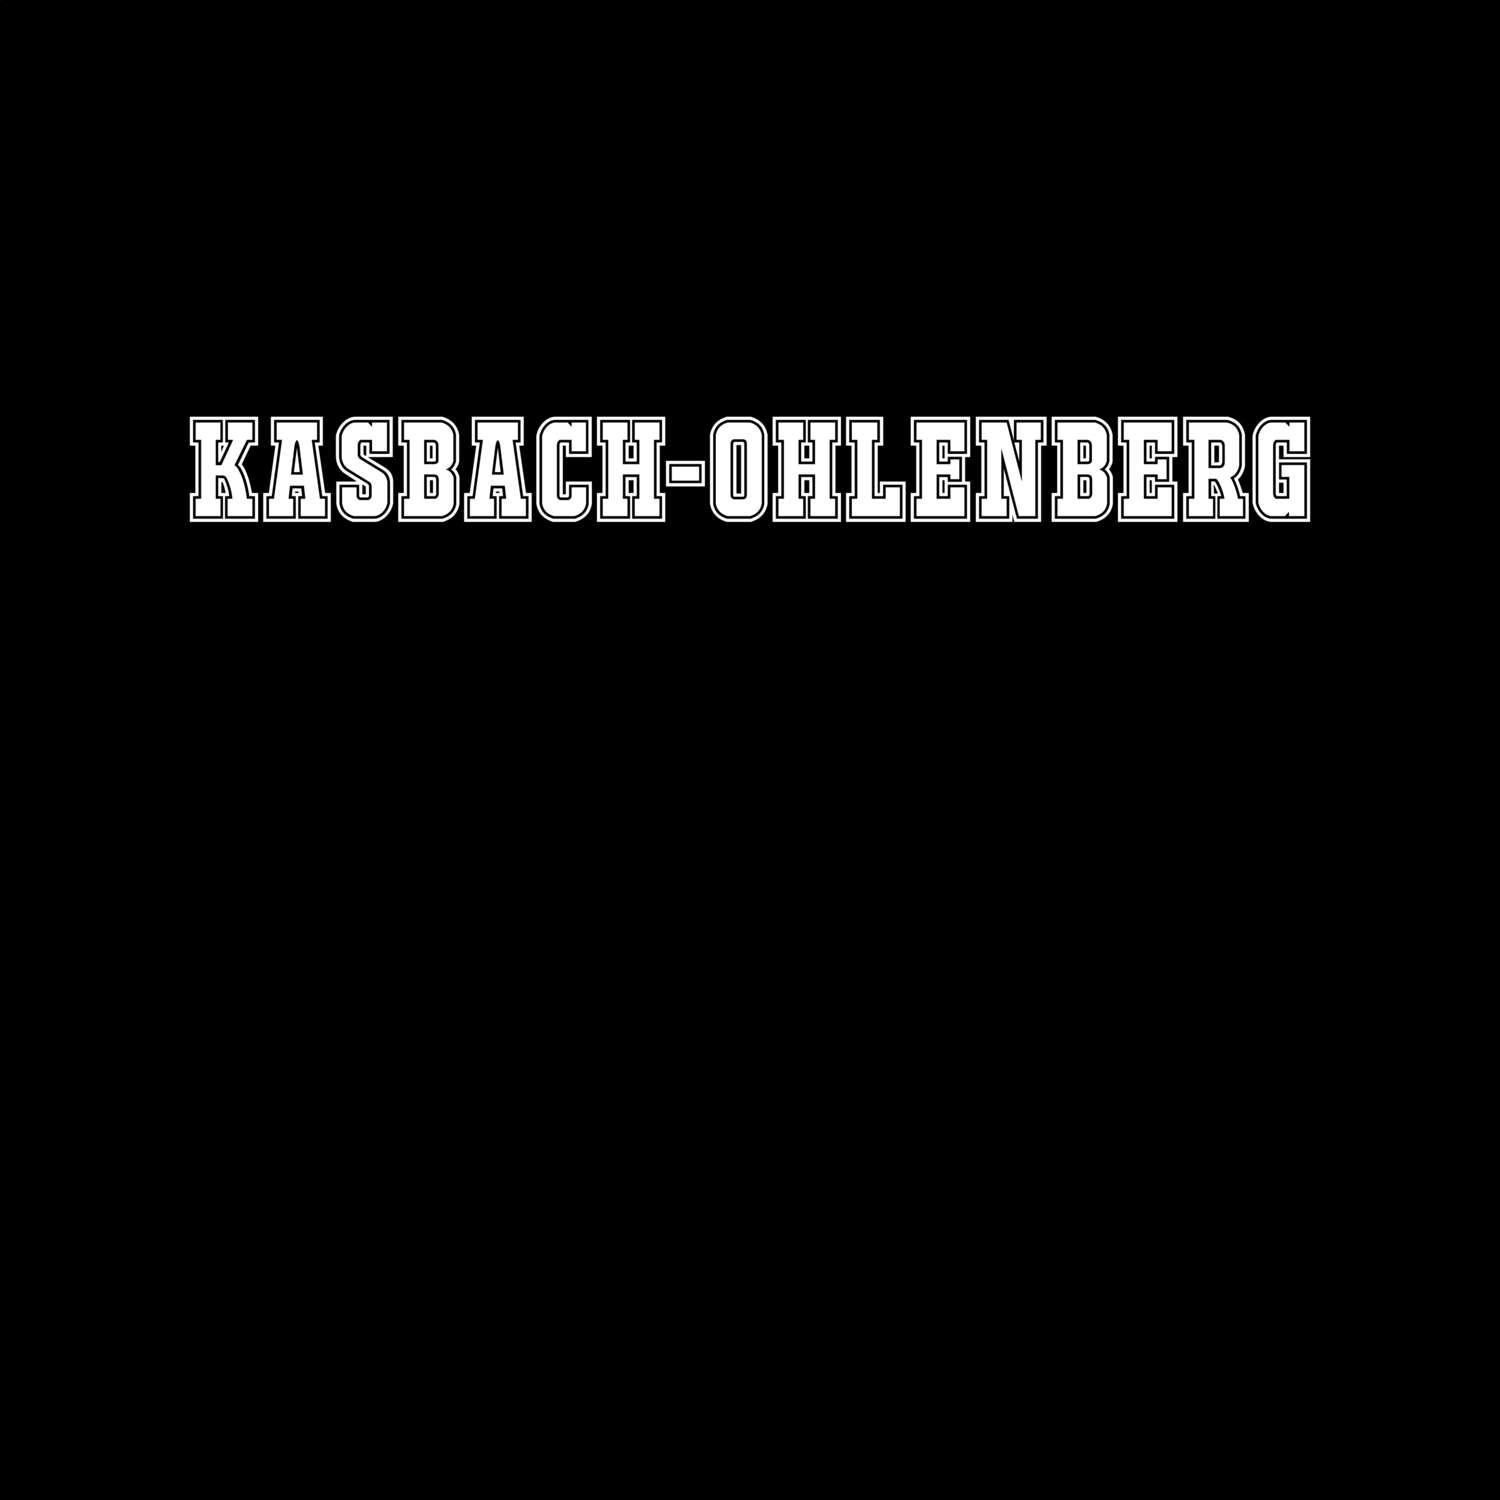 Kasbach-Ohlenberg T-Shirt »Classic«